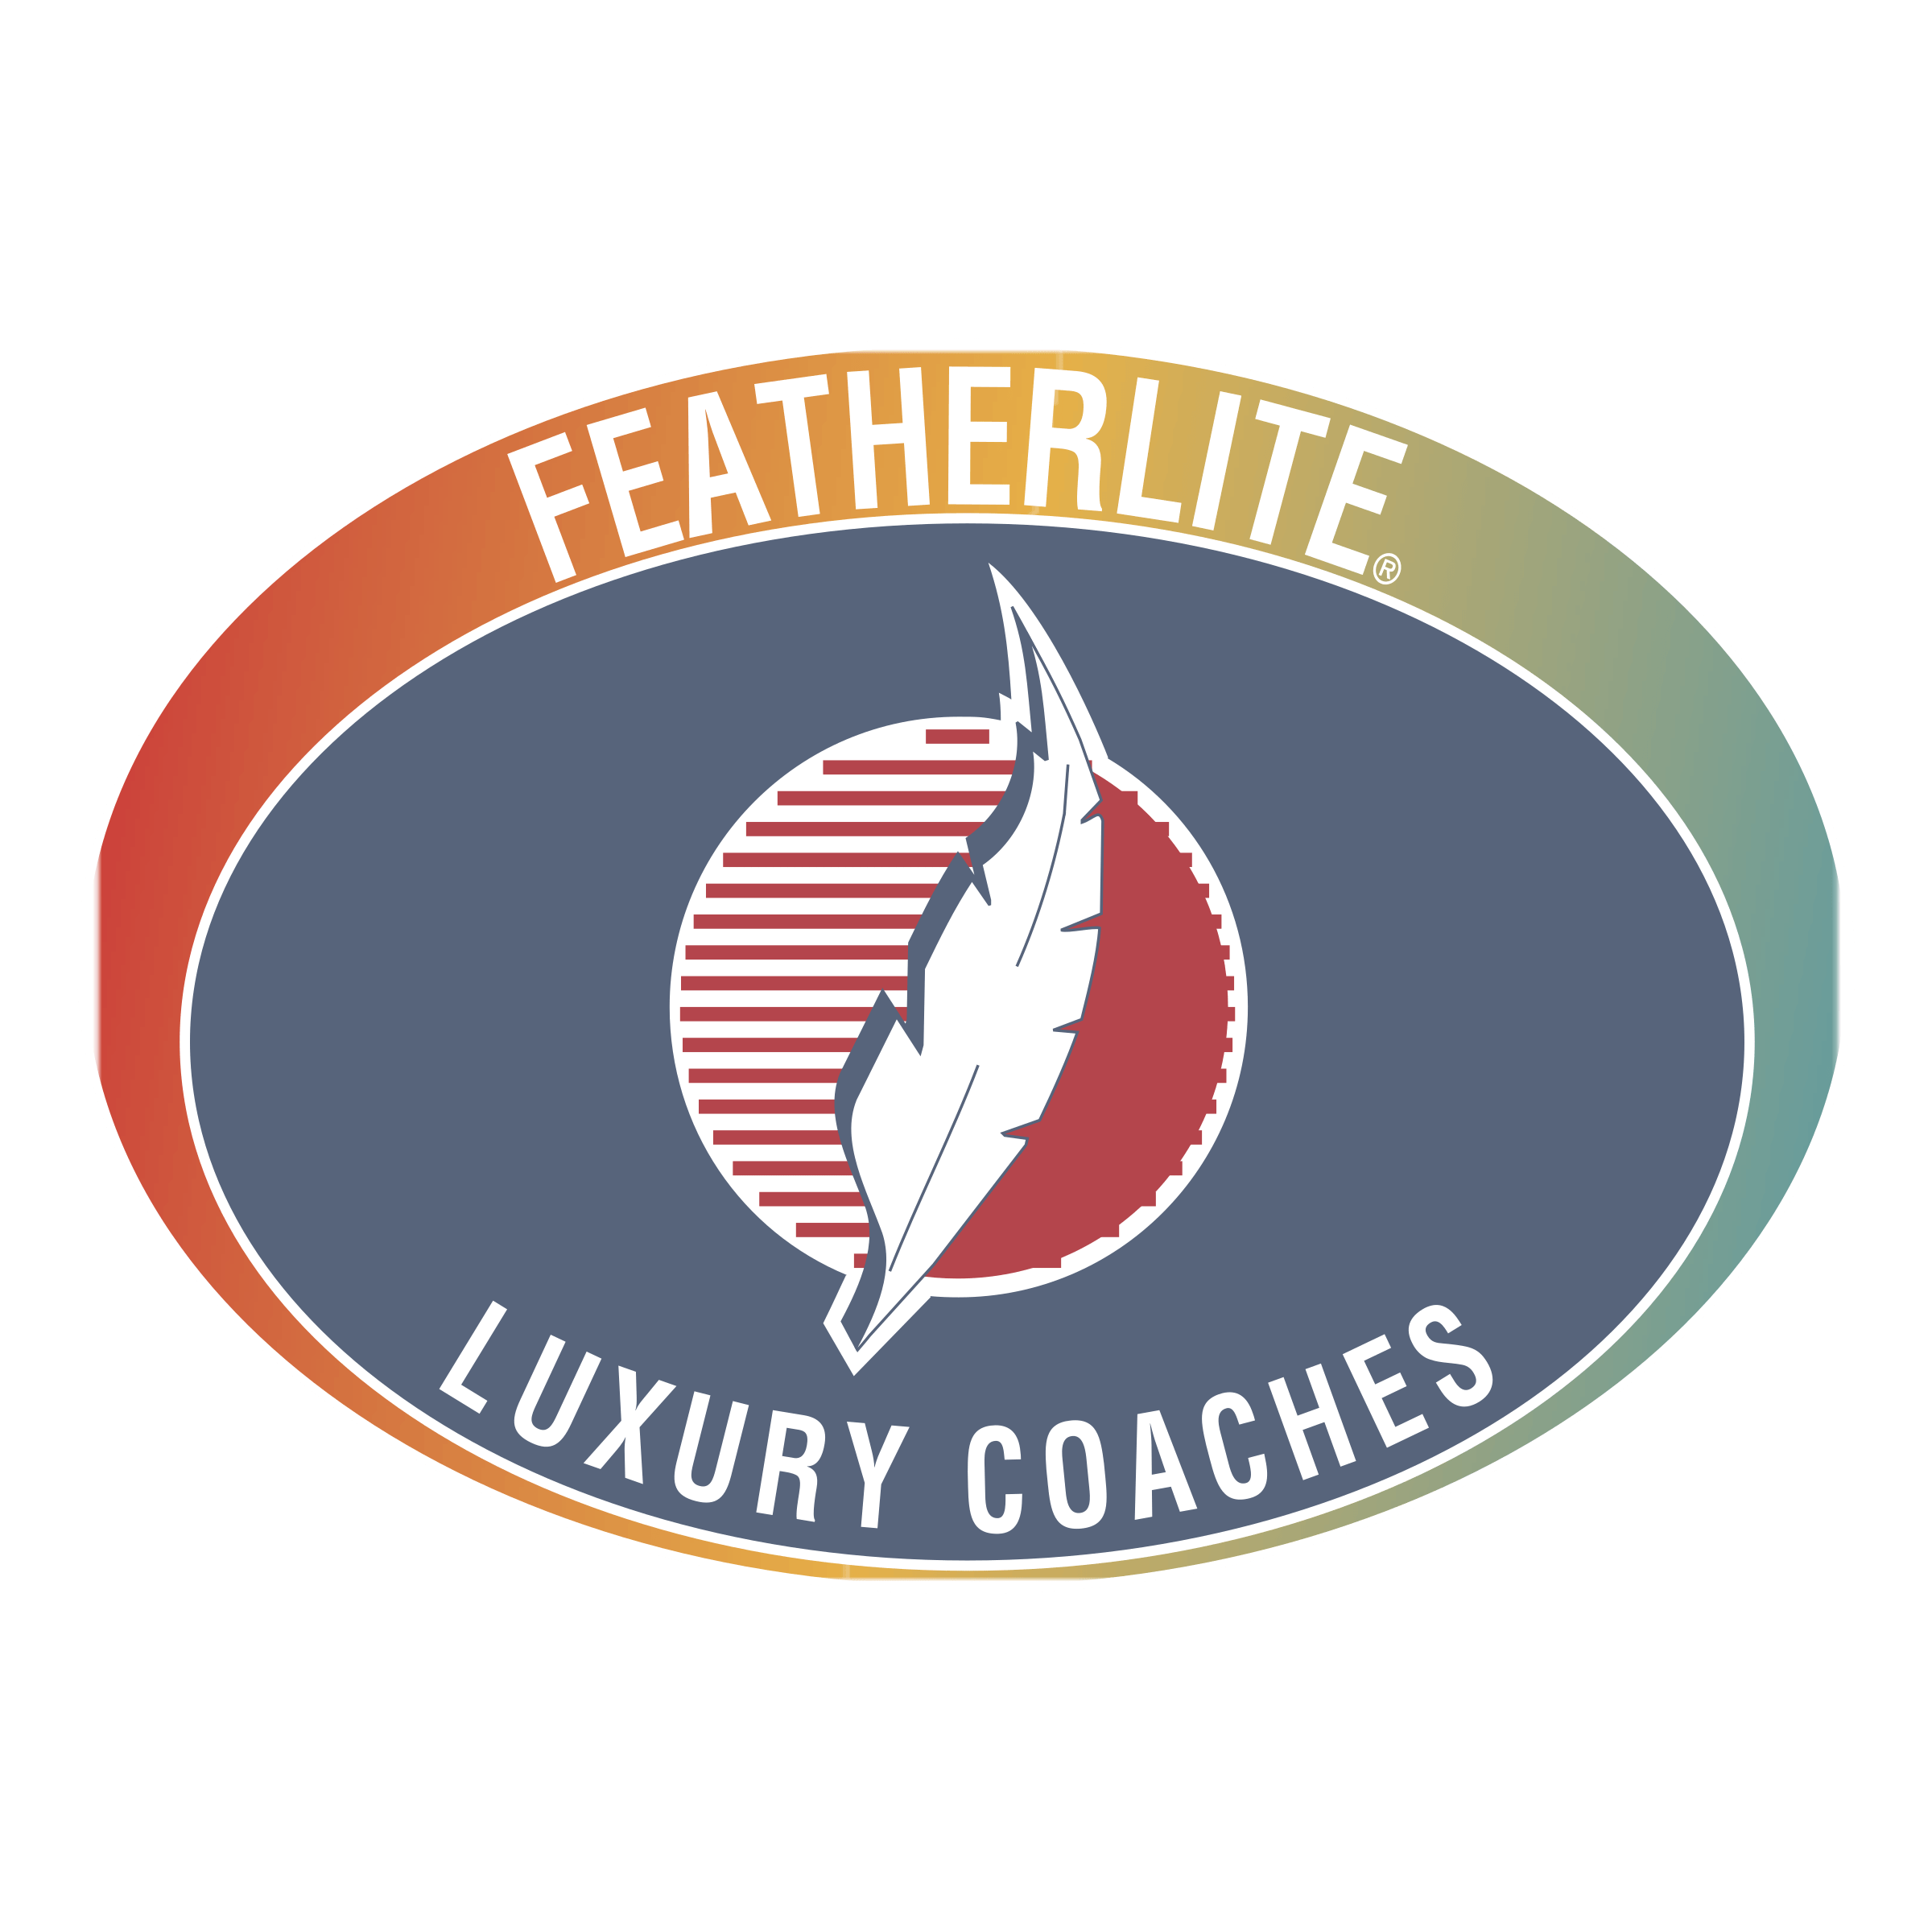 Featherlite Logo - Featherlite Logo PNG Transparent & SVG Vector - Freebie Supply